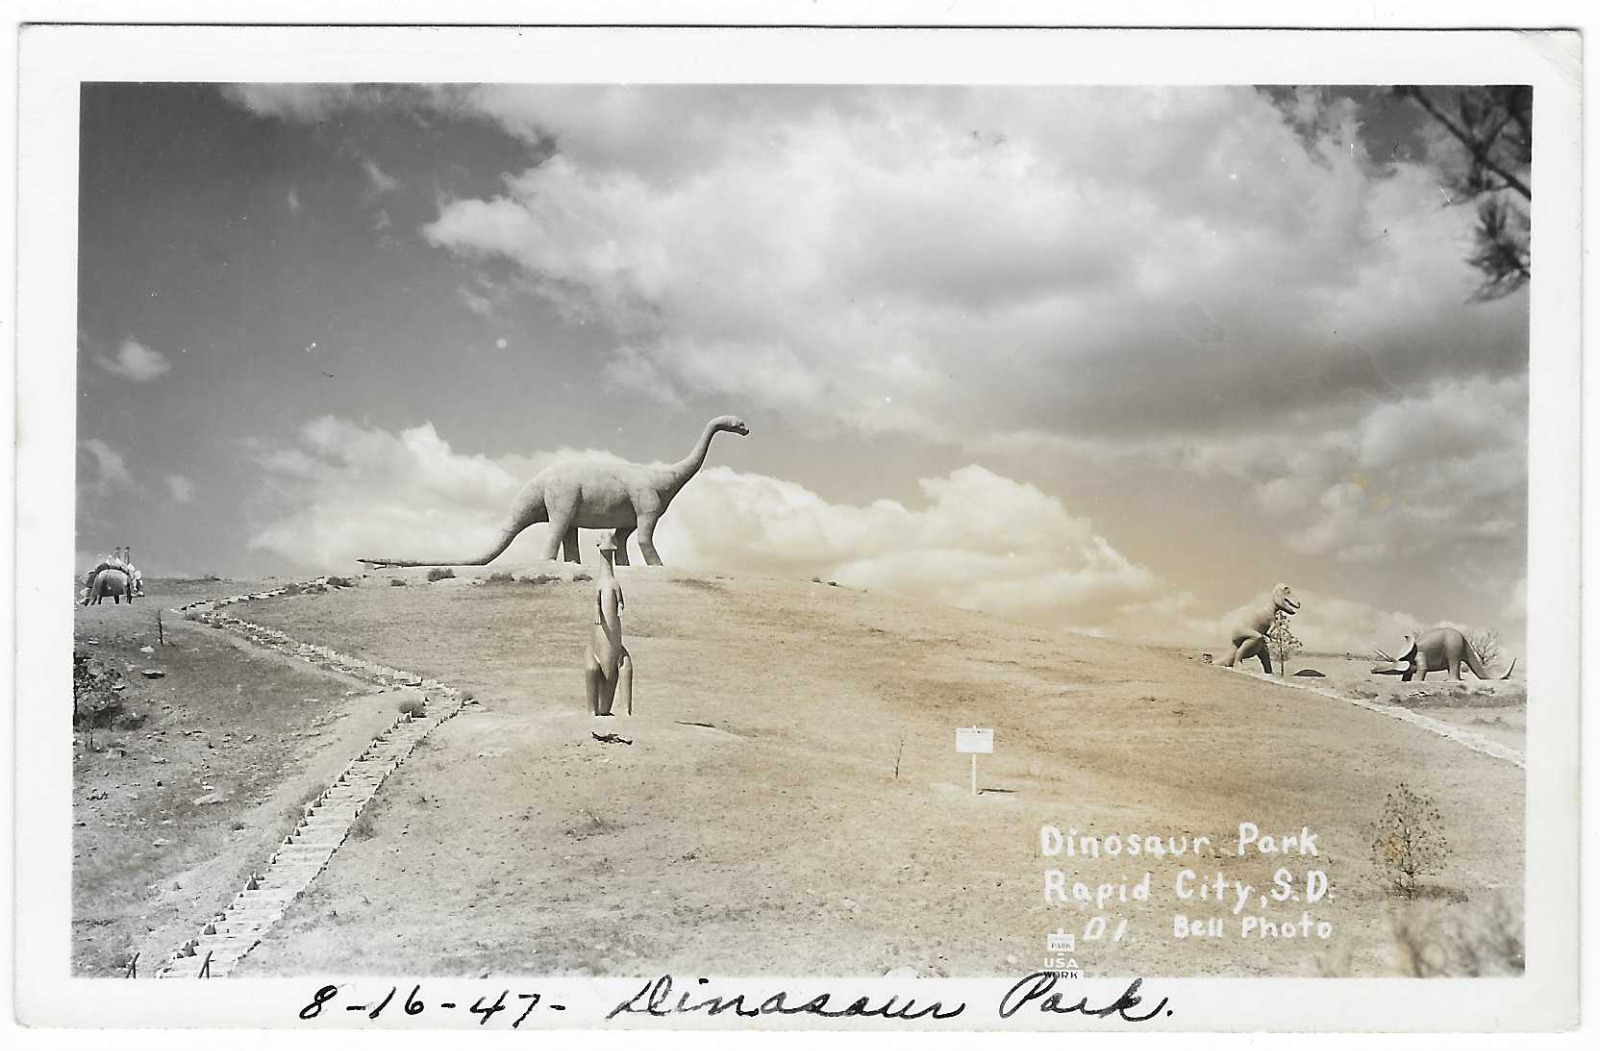 Vintage Postcard Dinosaur Park Rapid City, SD  RPPC D1 Bell Photo UNP